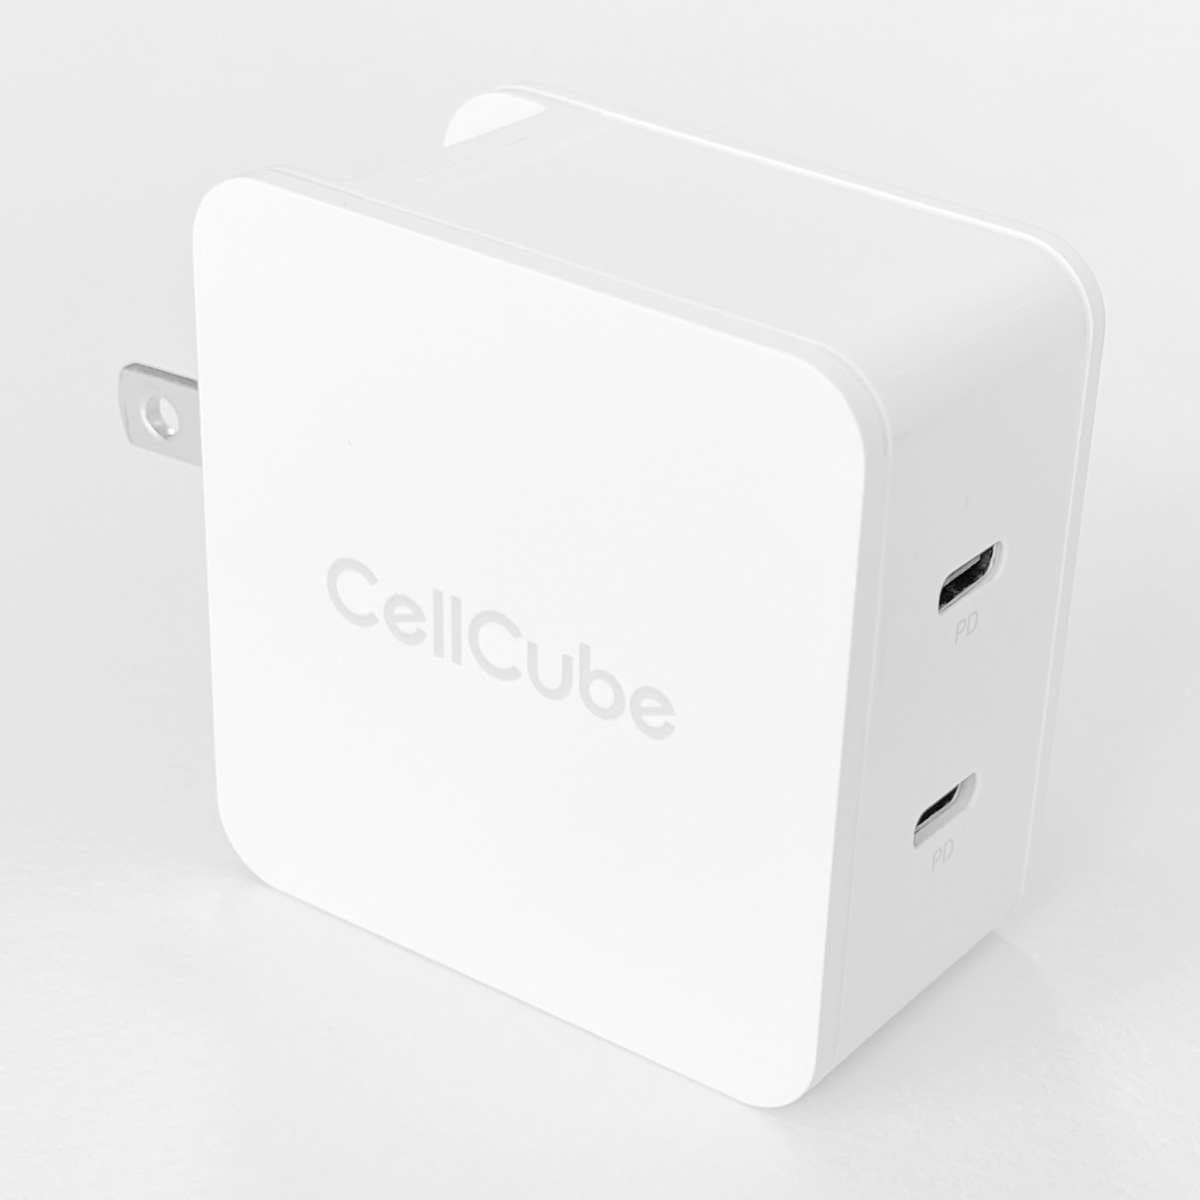 au Cellcube Cタイプ充電器 | uzcharmexpo.uz